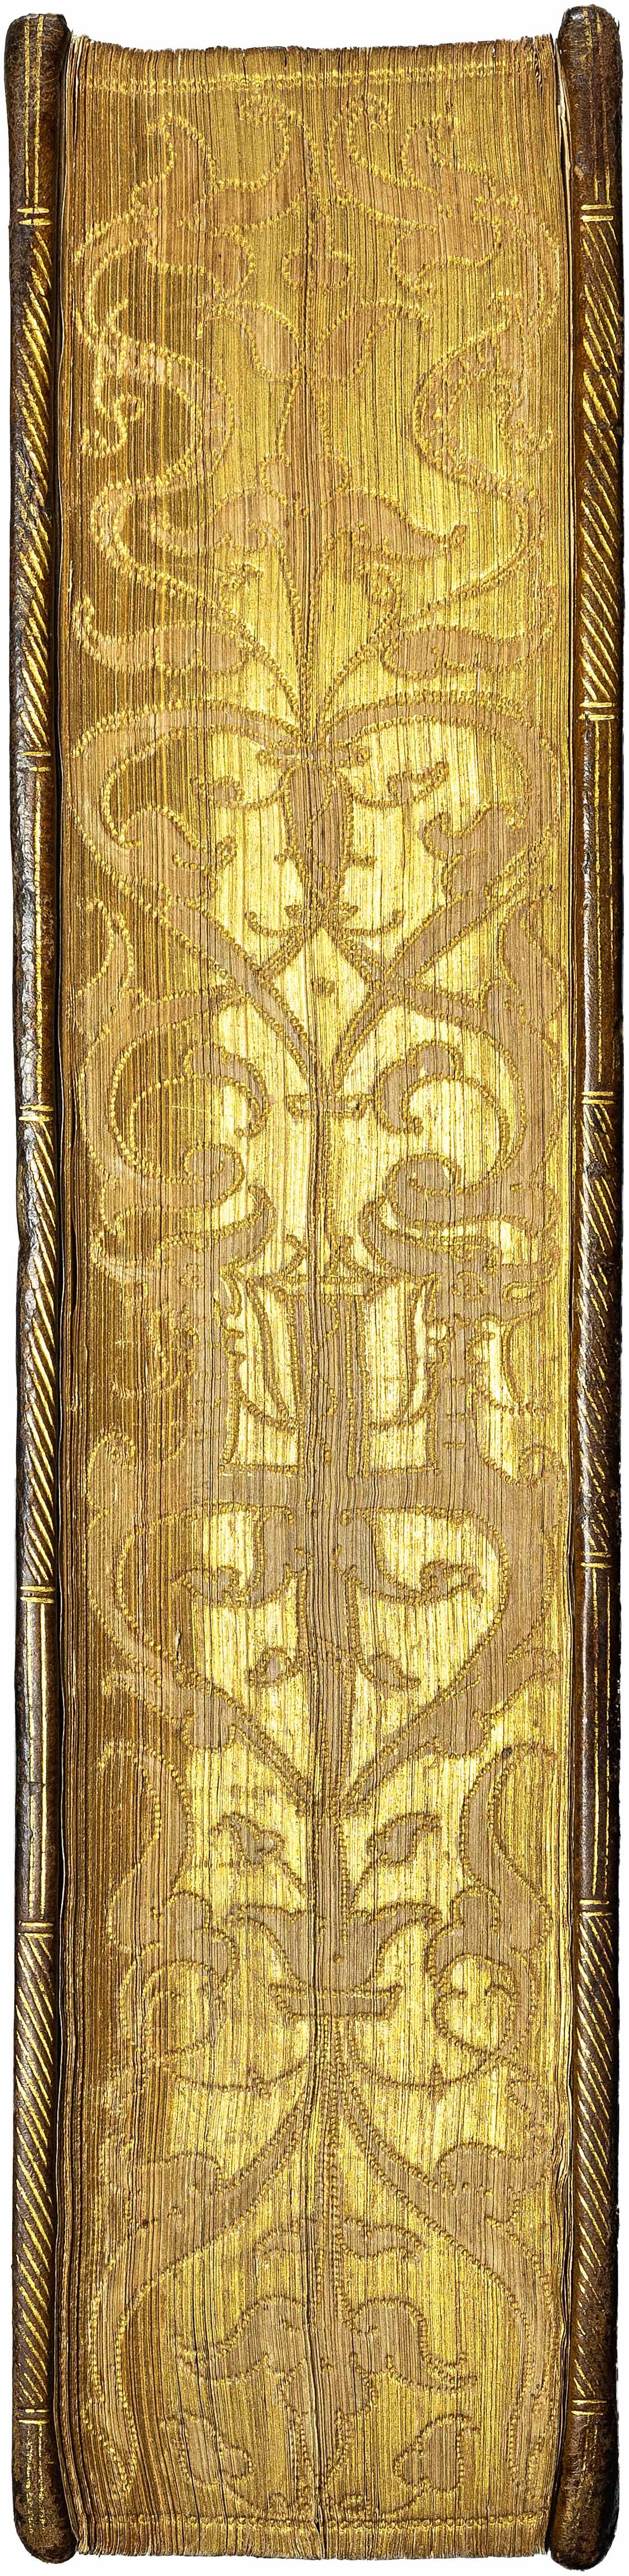 Vergil-1502-opera-mosaic-binding-gomar-estienne-king-henri-ii-woddcuts-strassburg-grueninger-06.jpg